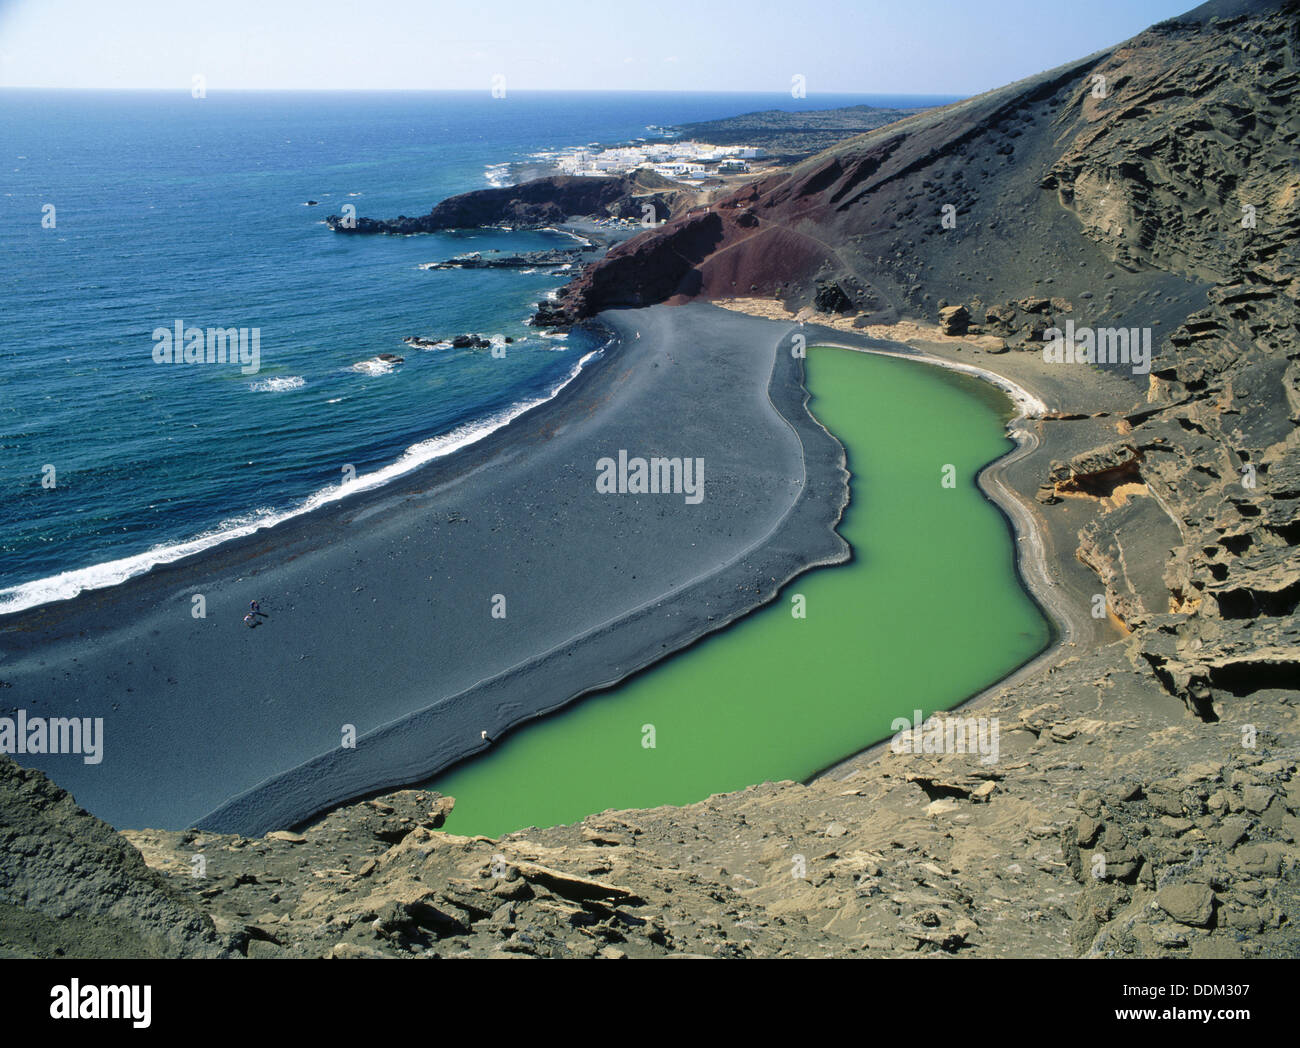 Laguna Verde (Green Lagoon) at El Golfo. Lanzarote. Canary Islands. Spain  Stock Photo - Alamy